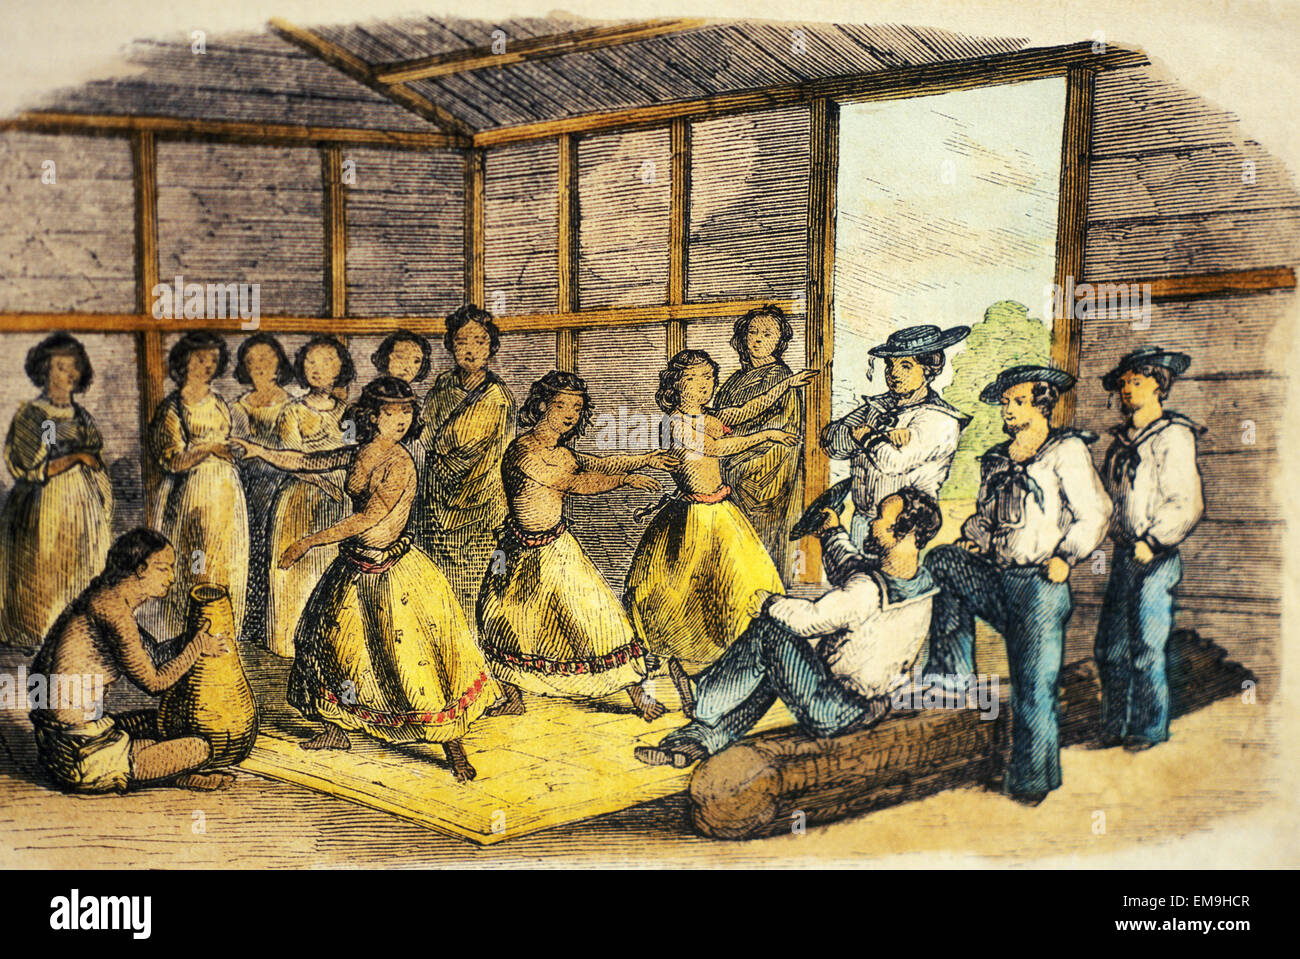 C.1845 Art/Illustration, Foreign Sailors Watch Hula Girls Dance. Stock Photo